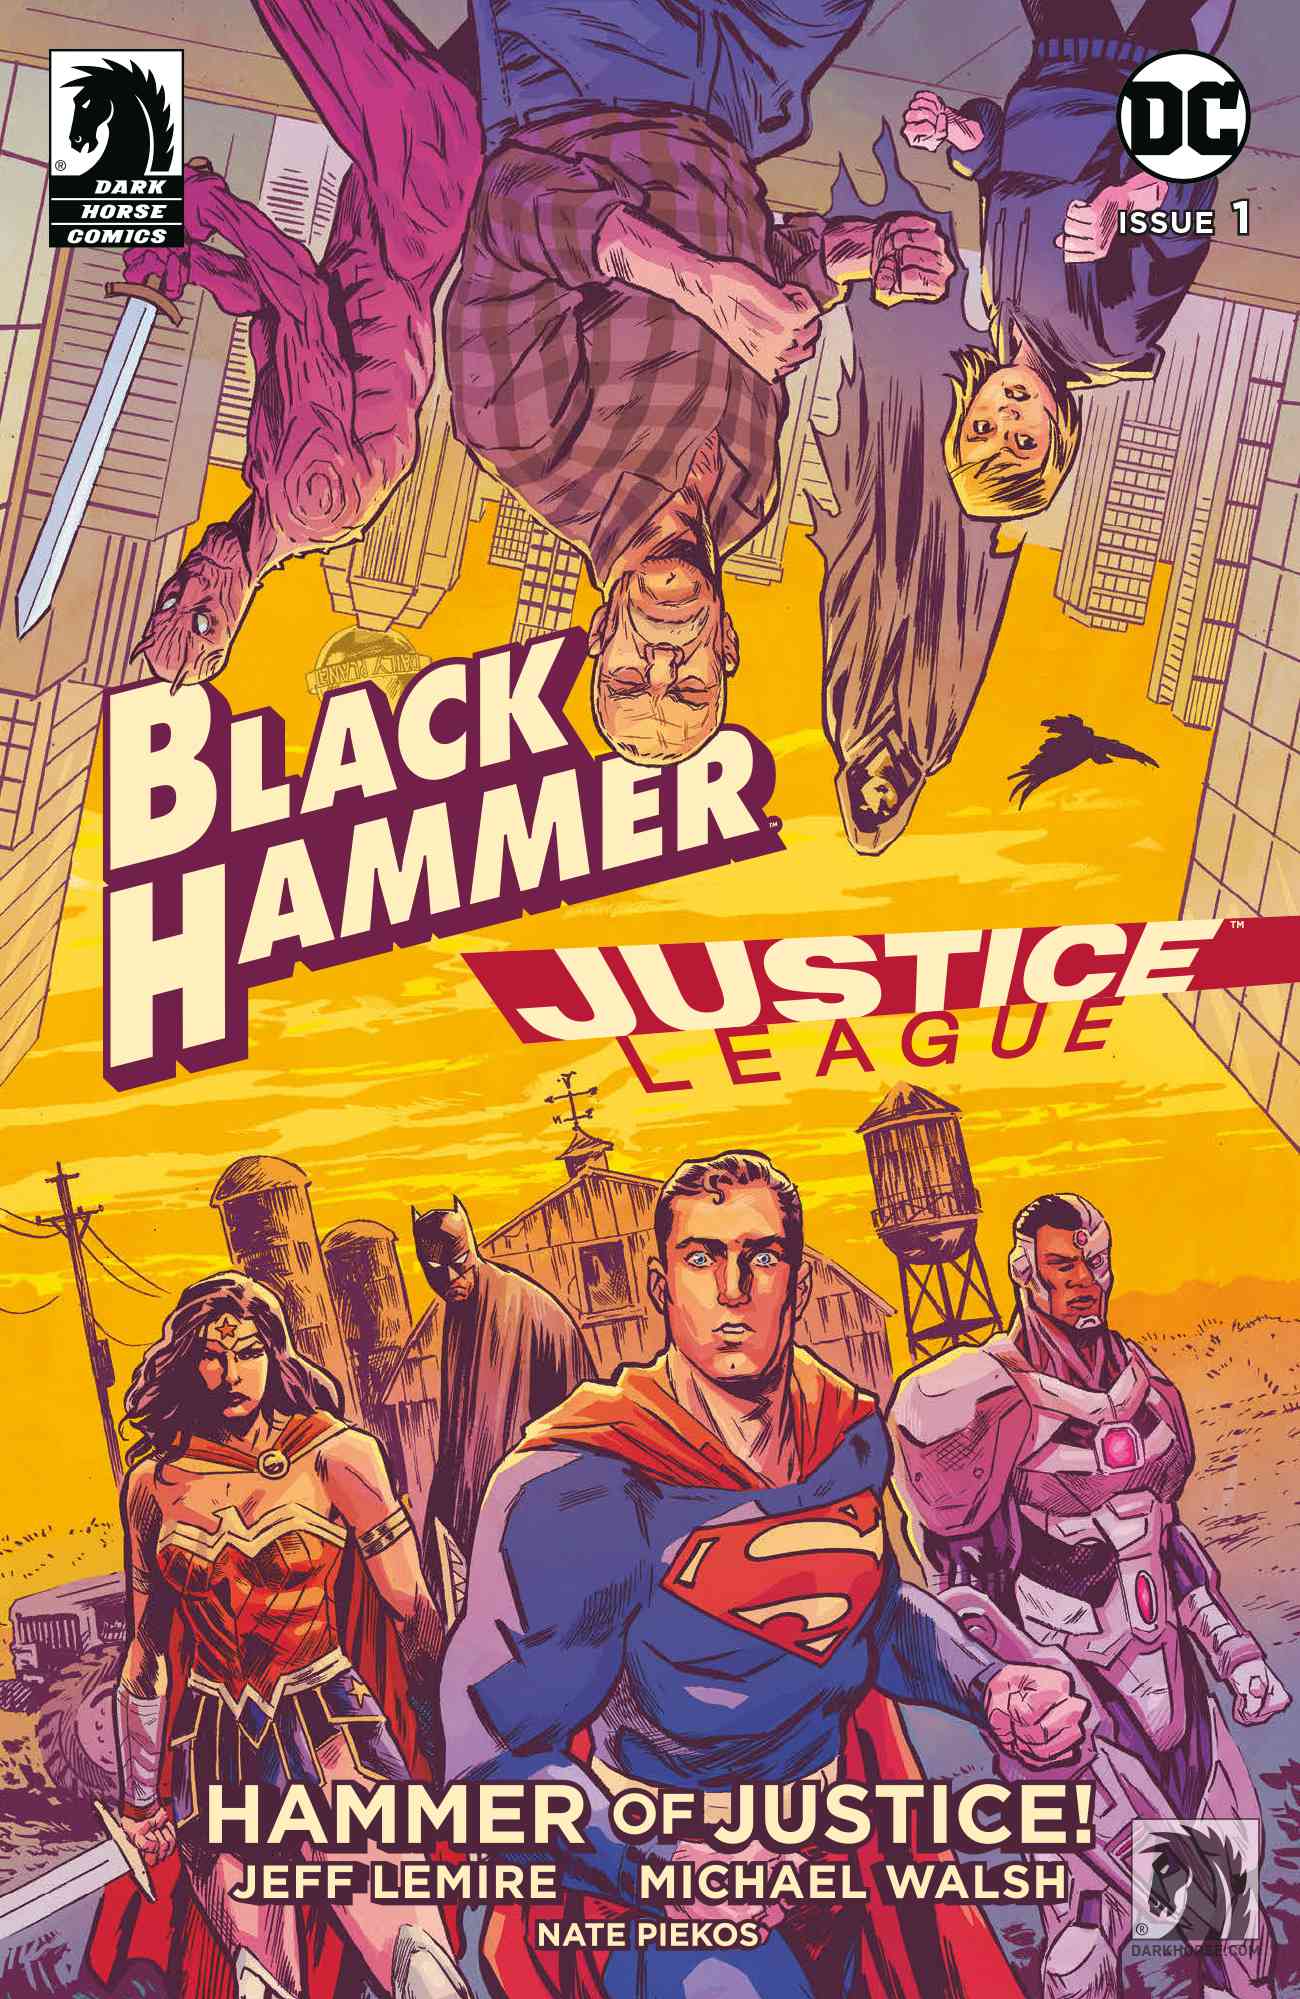 Black Hammer Justice League